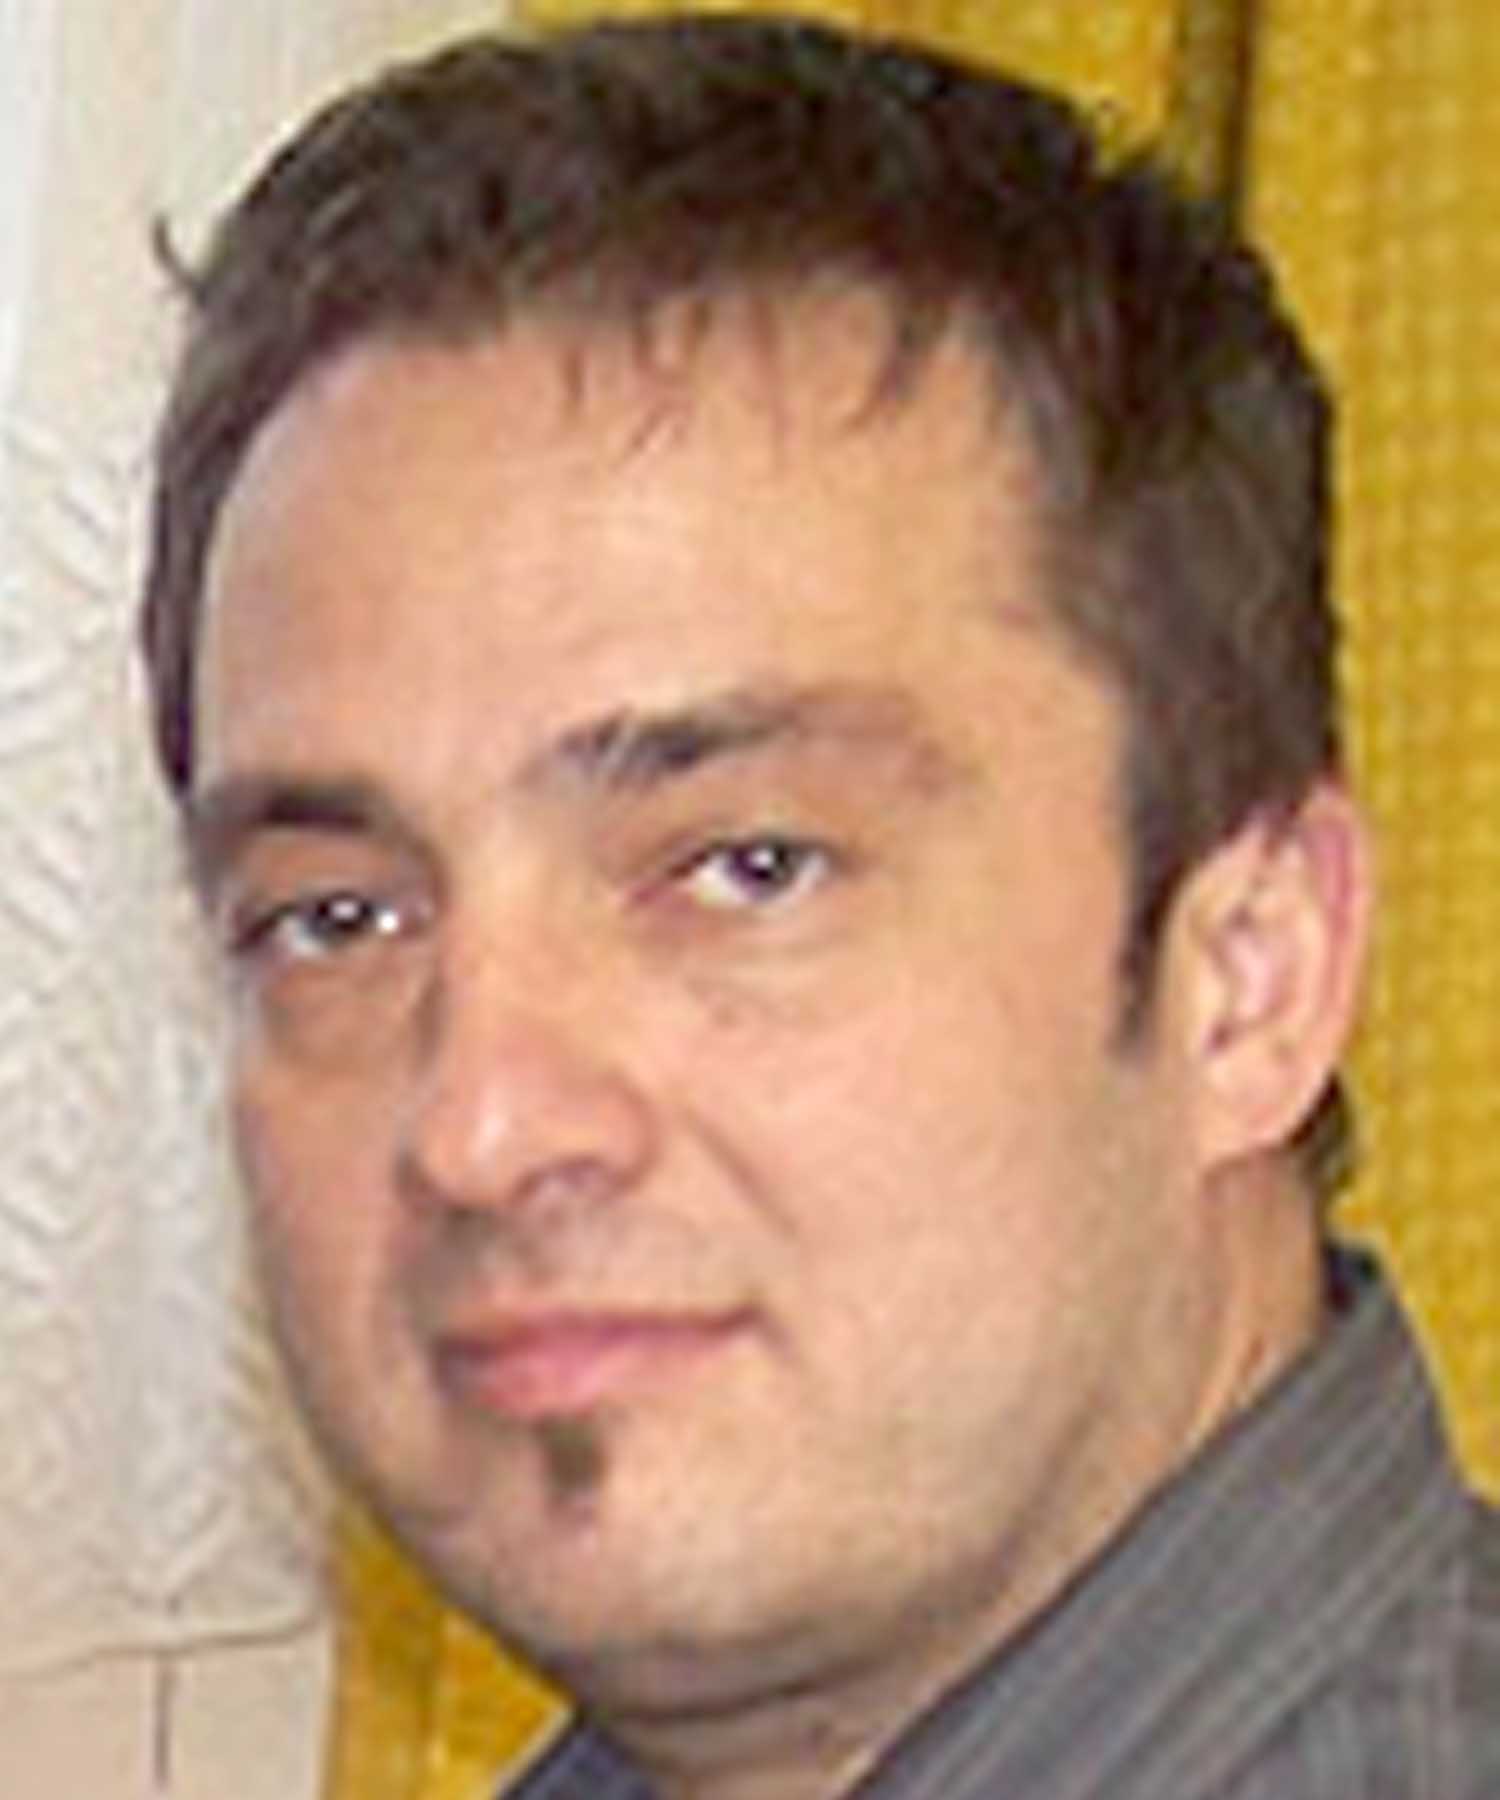 Daniel Vlad